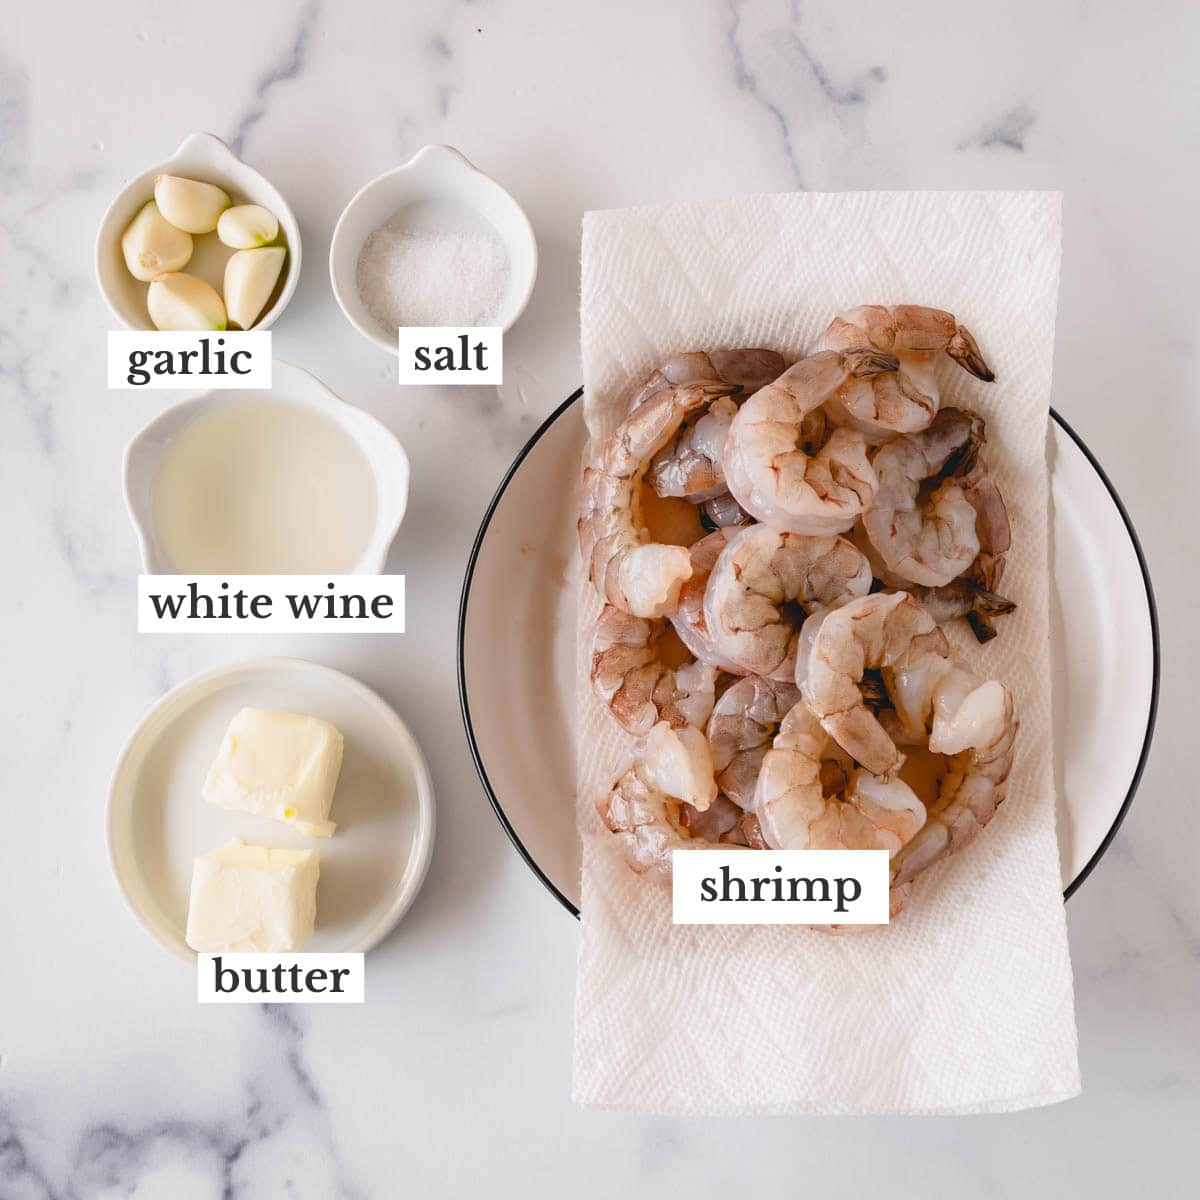 Garlic, salt, white wine, butter, and shrimp to make garlic butter shrimp.